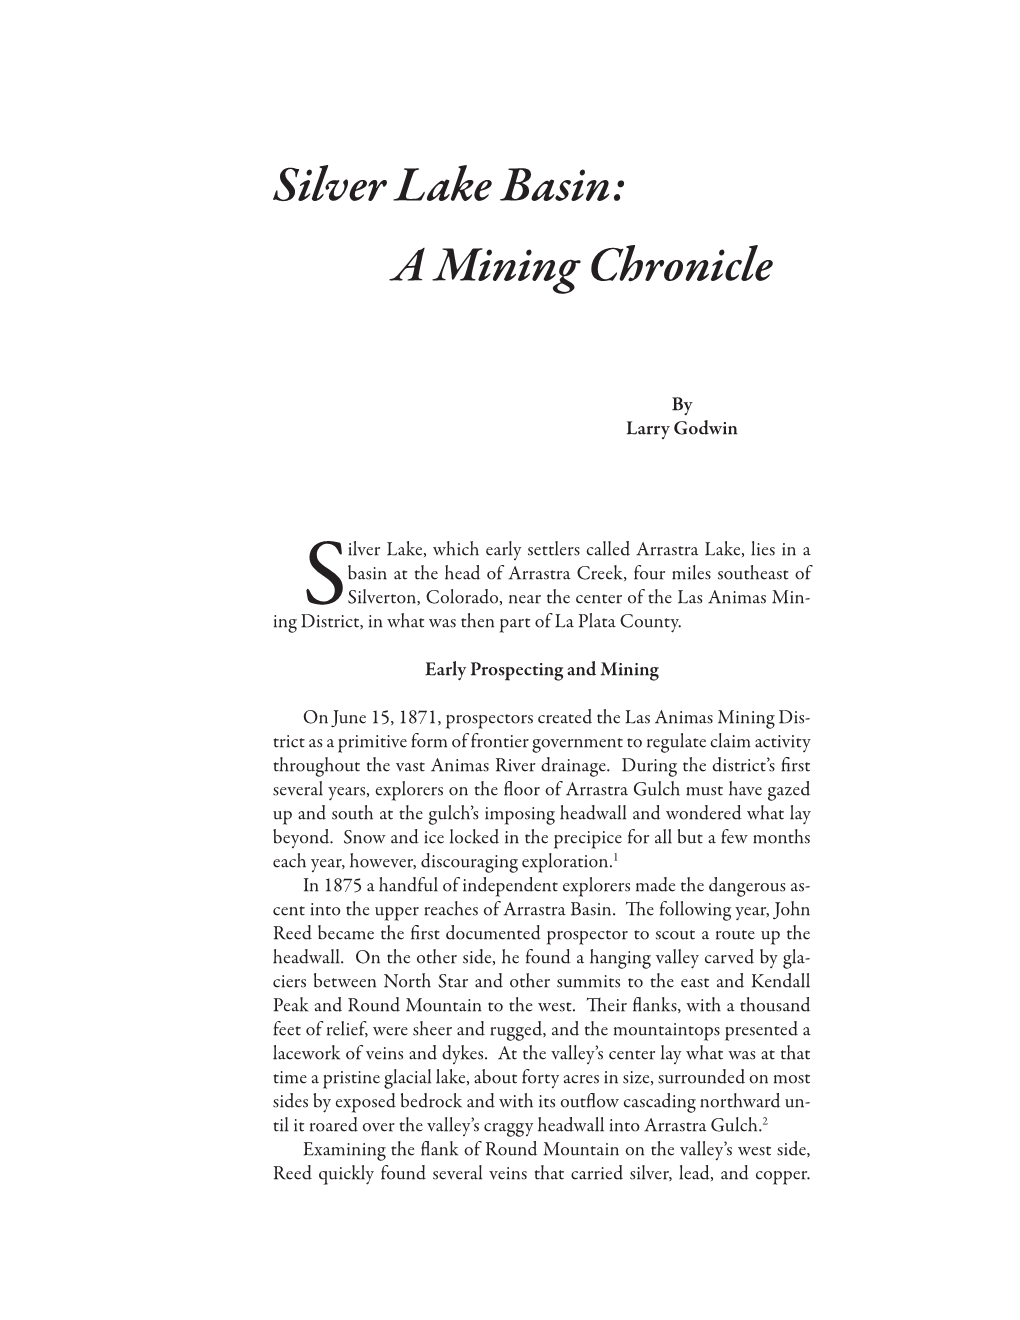 Silver Lake Basin: a Mining Chronicle